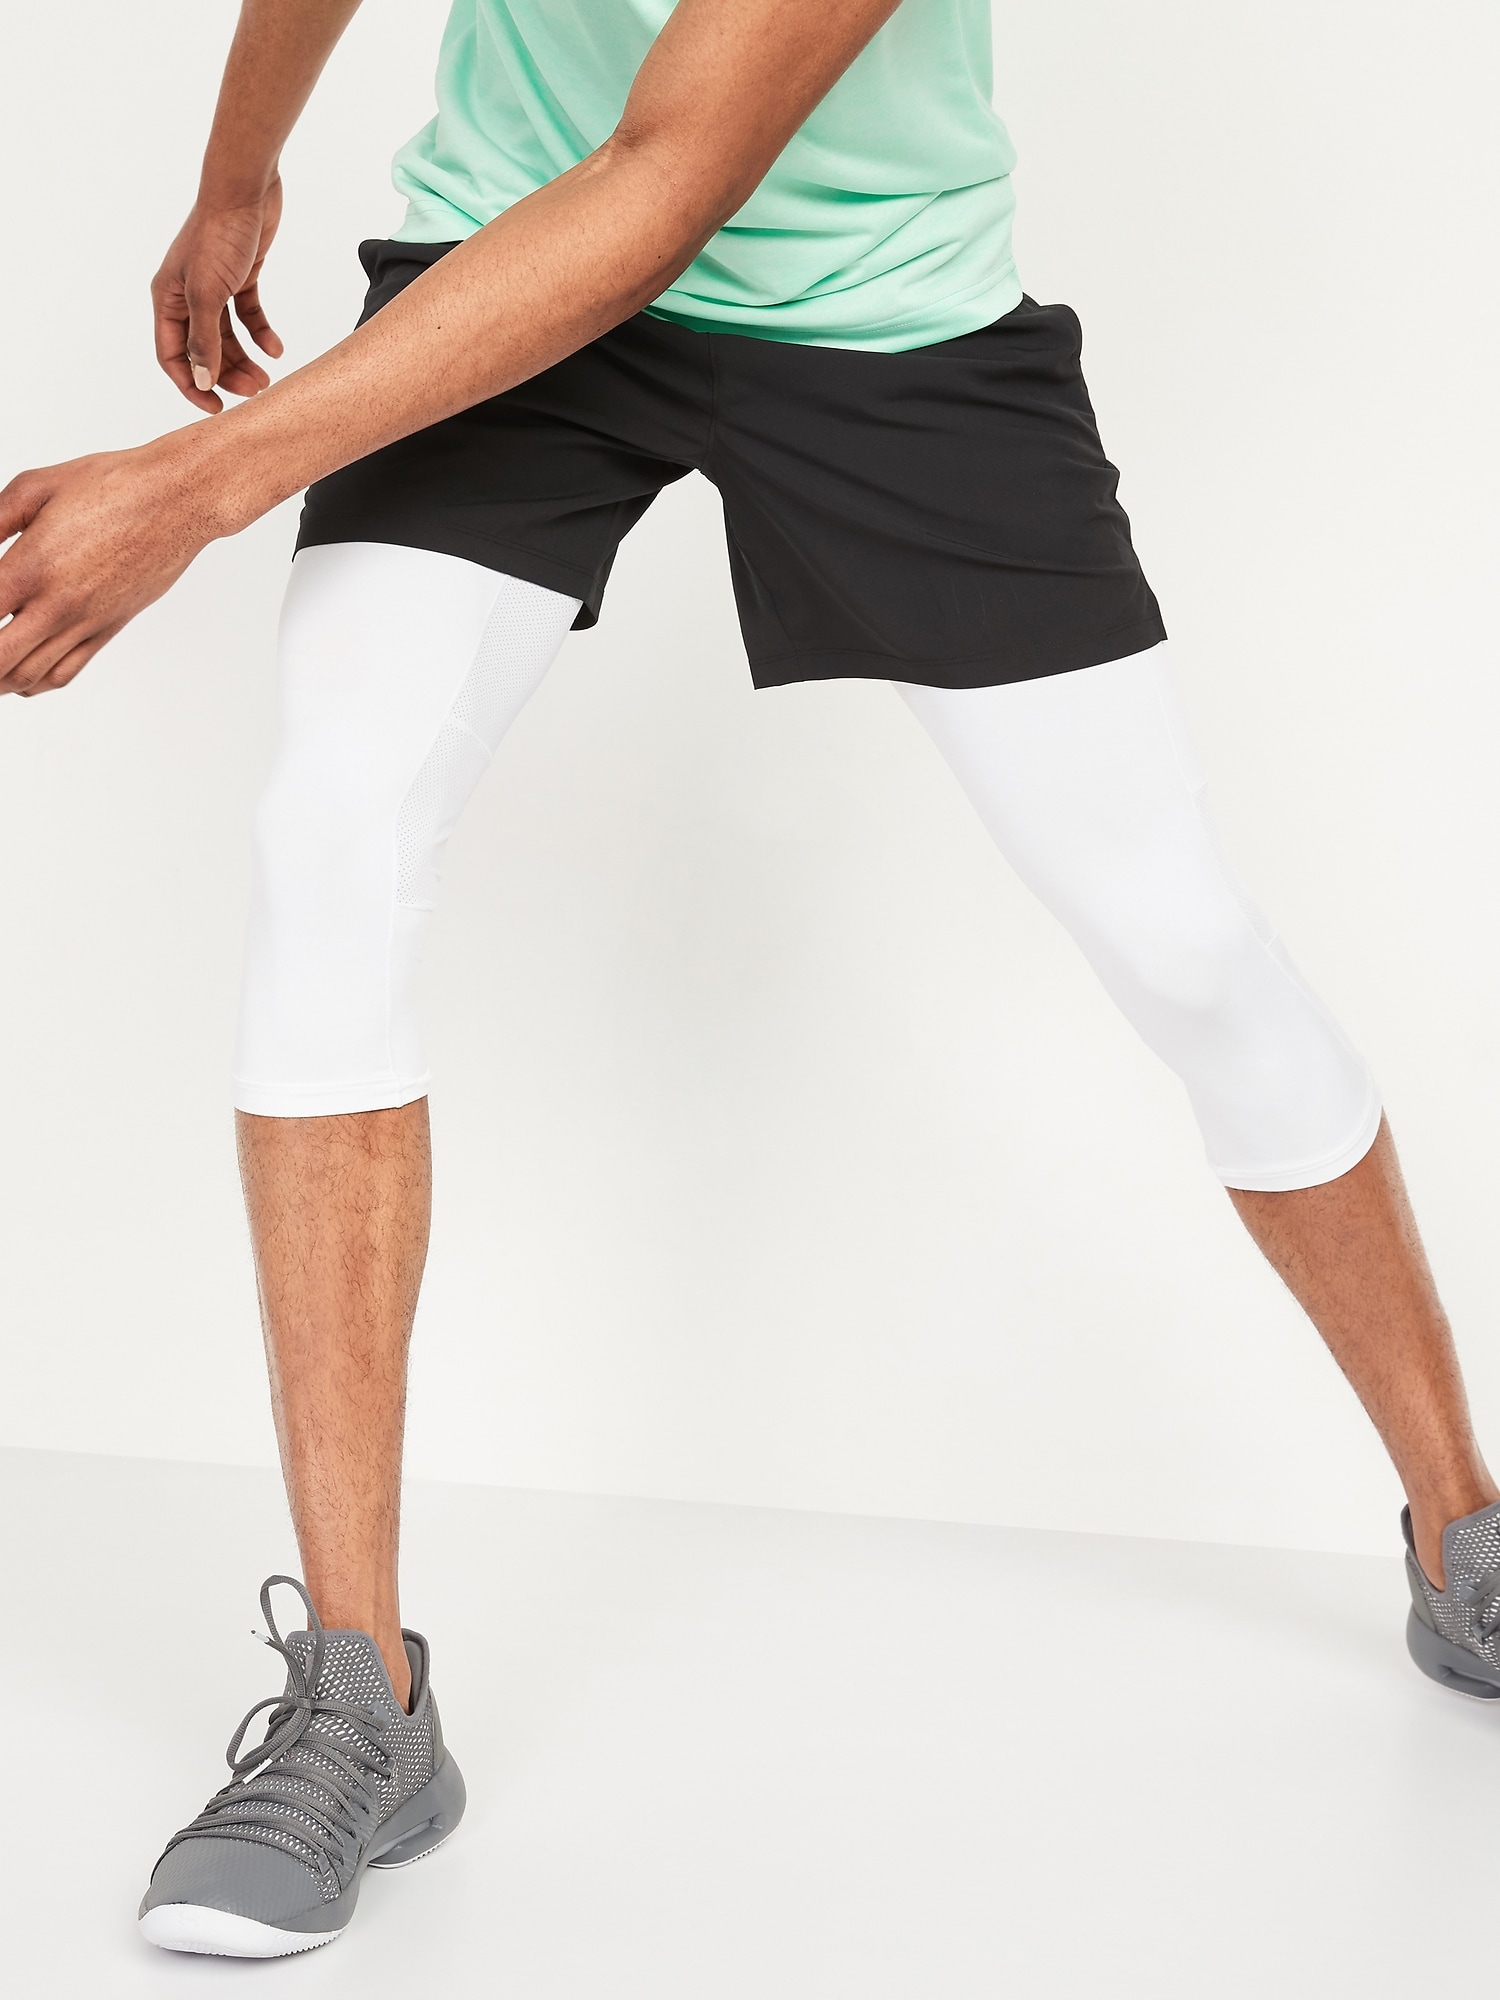 Go Workout Shorts -- 7-inch inseam